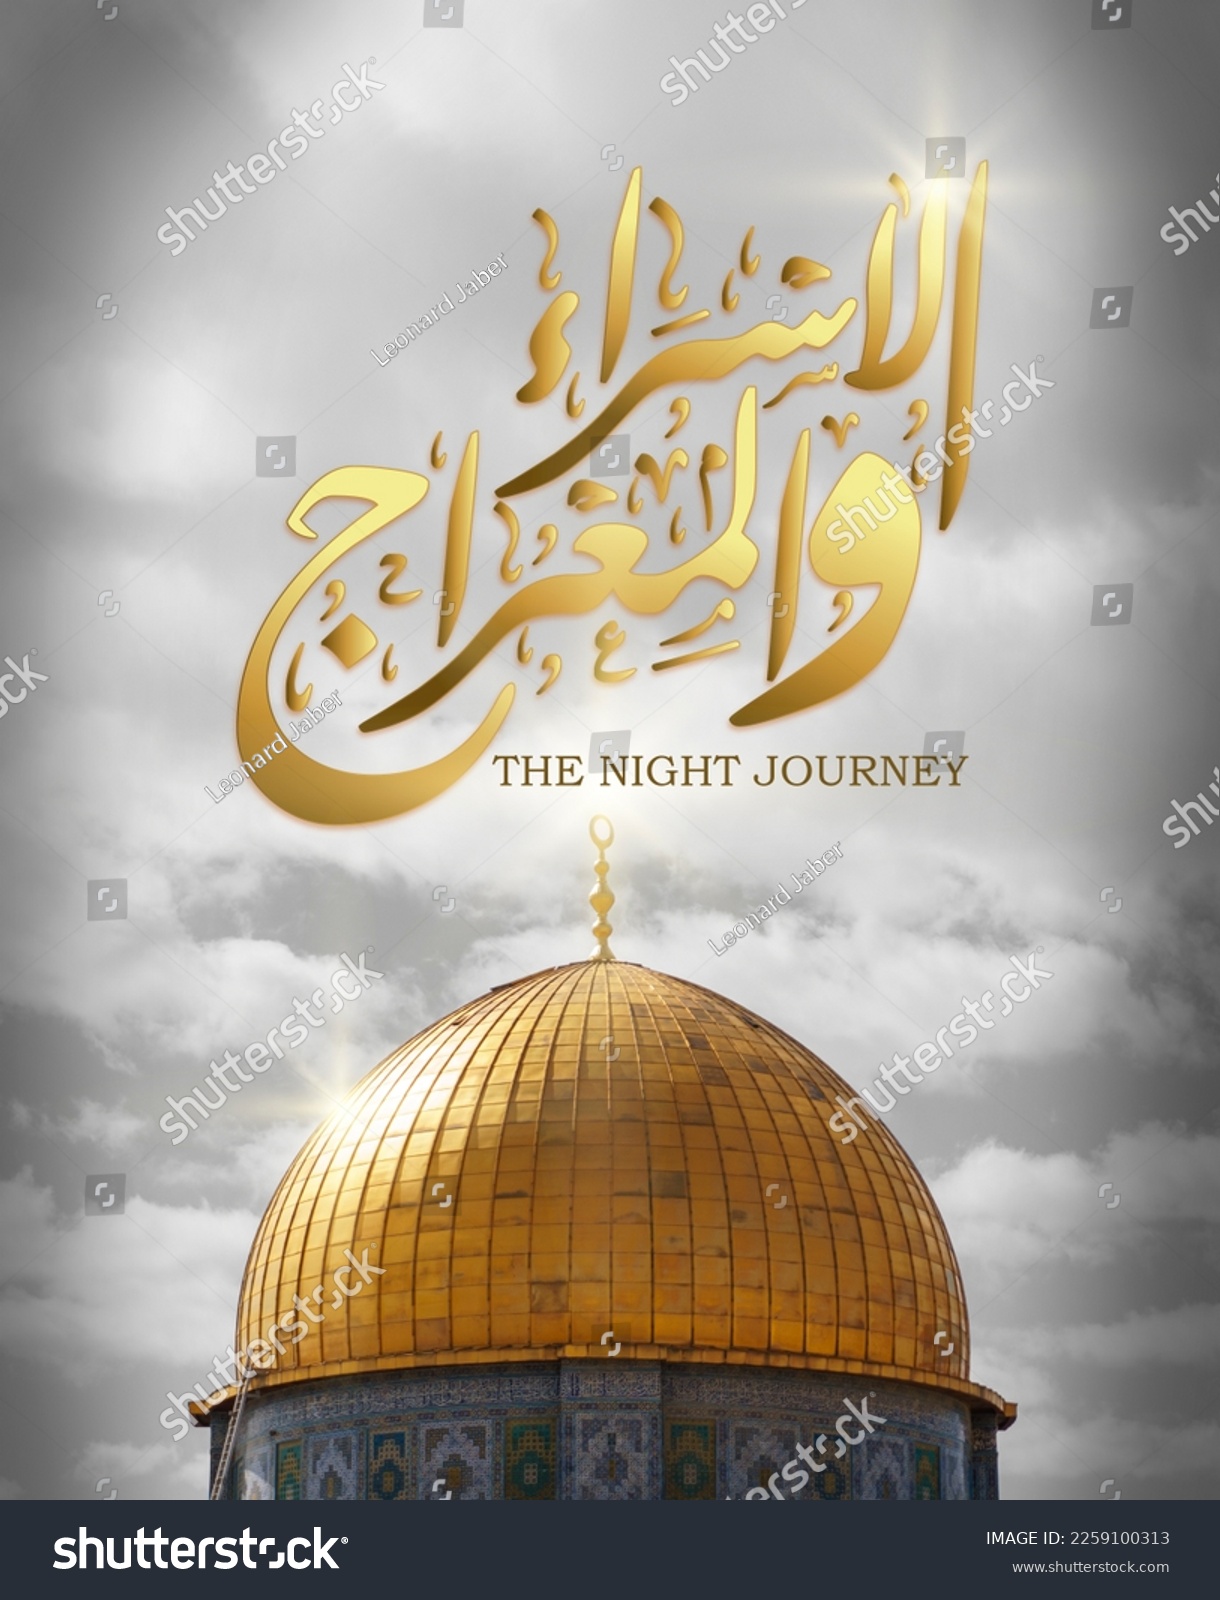 The Dome of the rock, Al-Aqsa Mosque, Al-Isra wal Mi'raj, means The night journey of Prophet Muhammad.poster design #2259100313